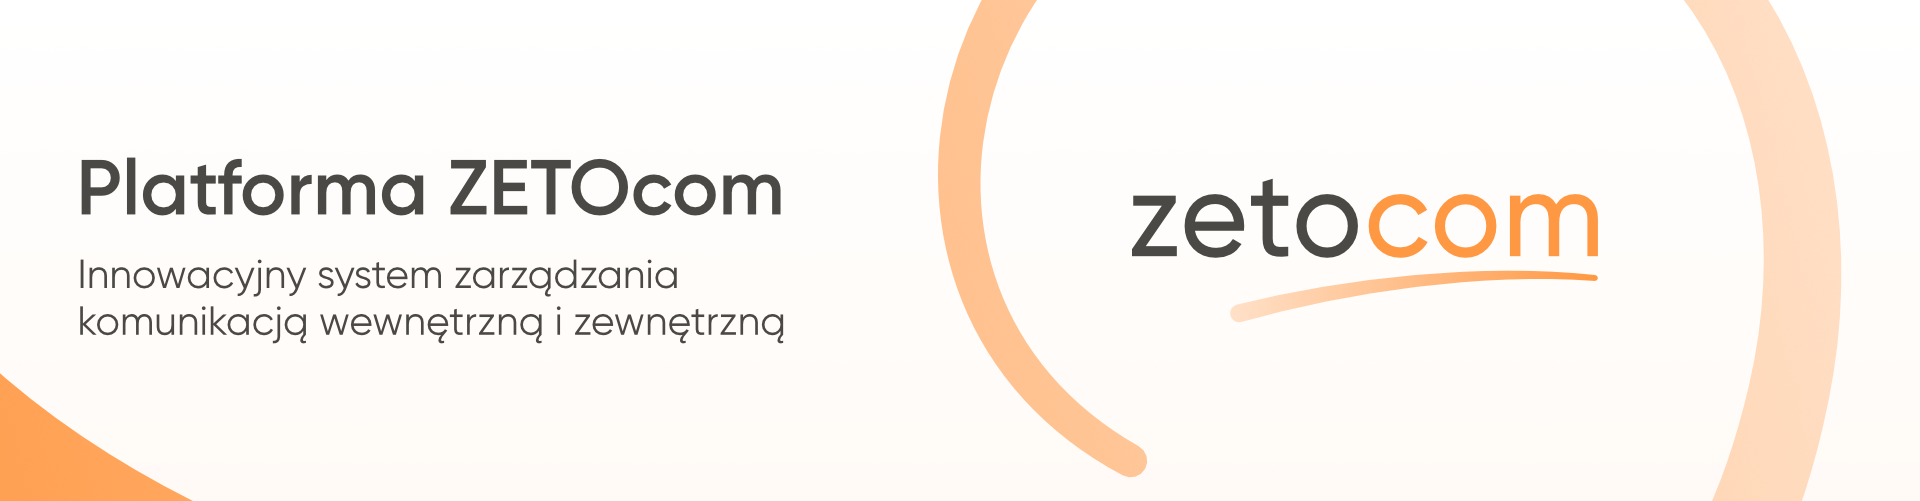 platforma-zetocom-baner2